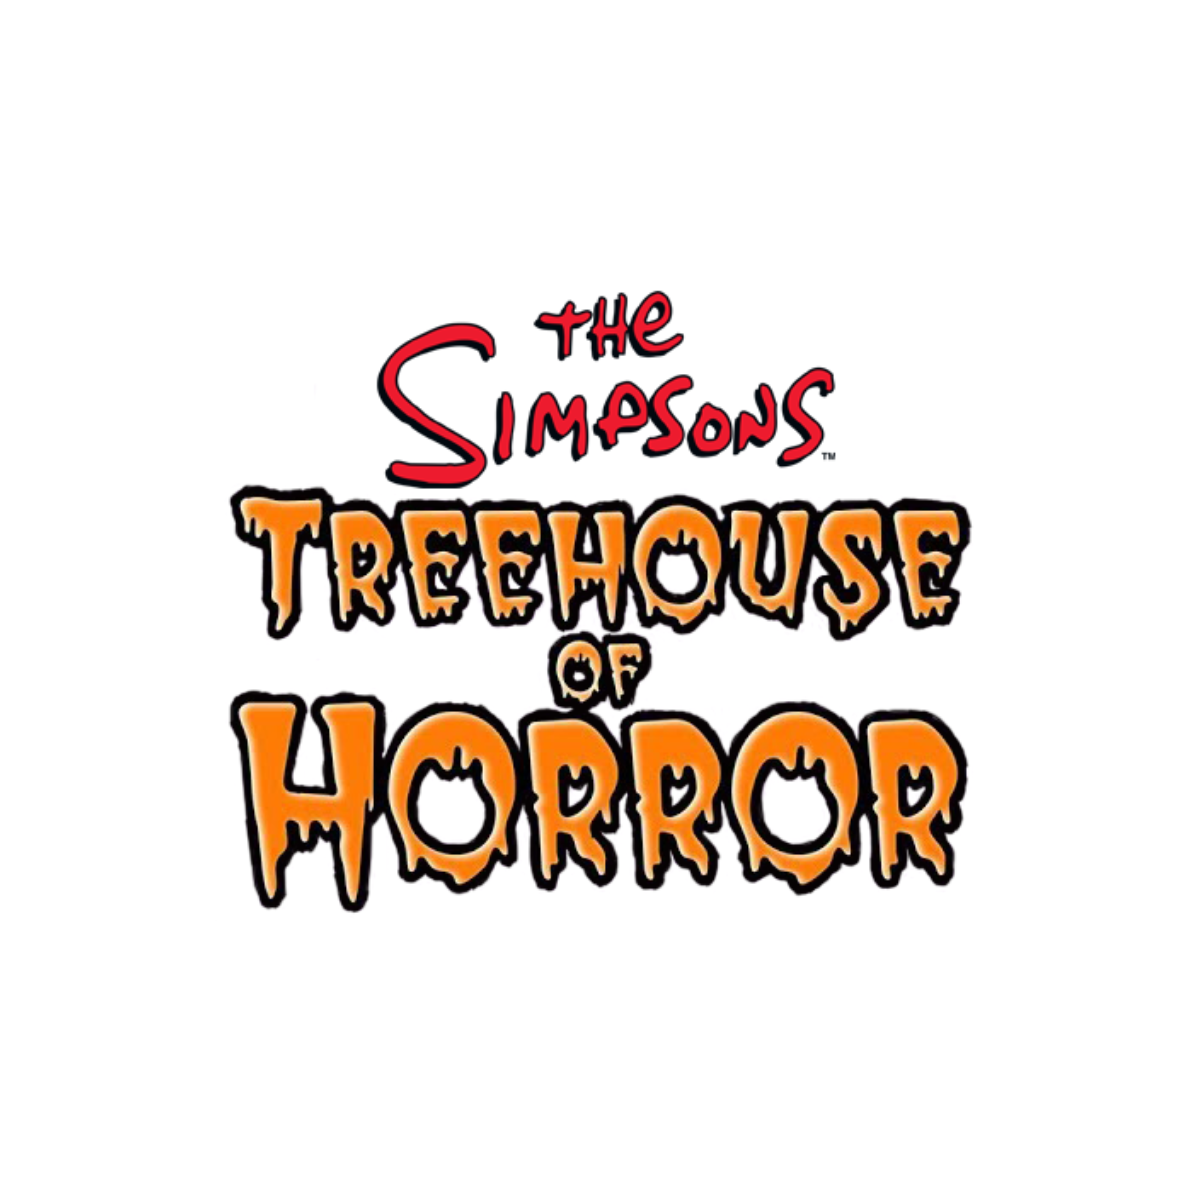 Treehouse Of Horror